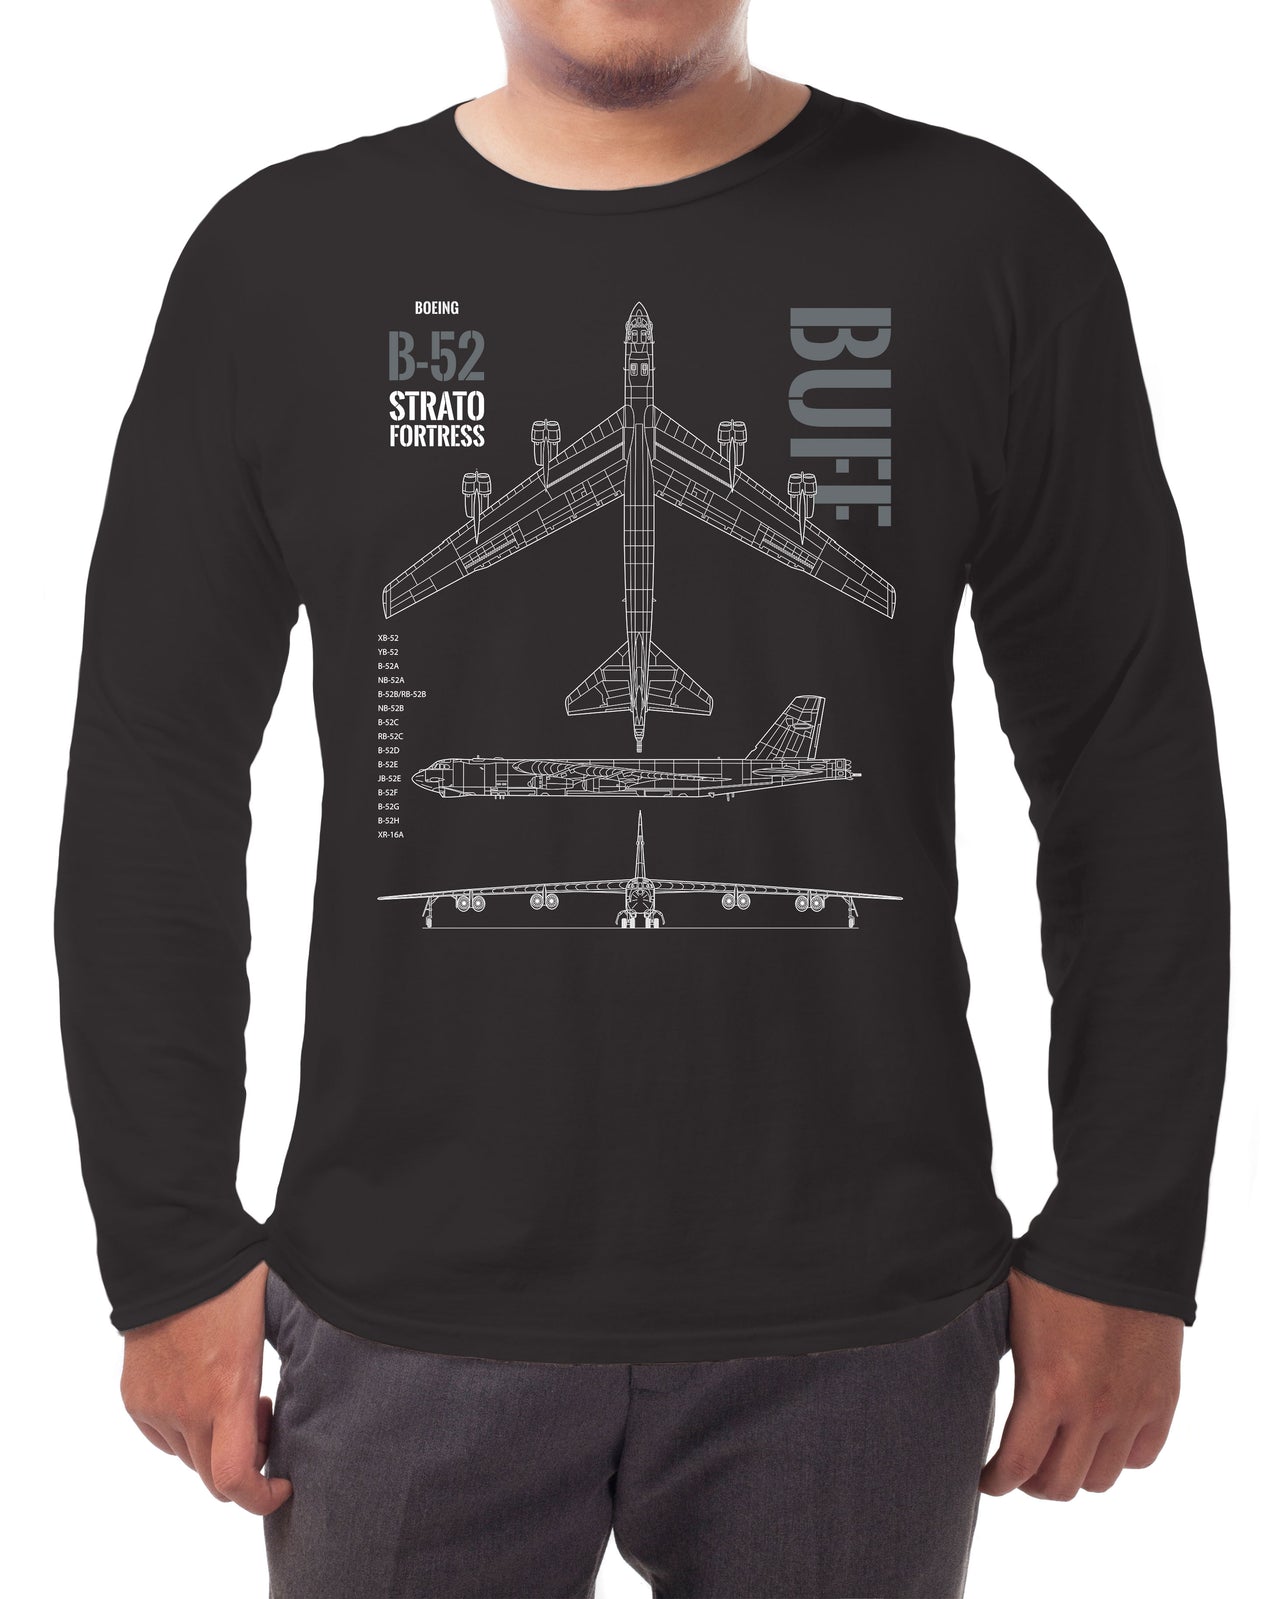 B-52 Stratofortress - Long-sleeve T-shirt